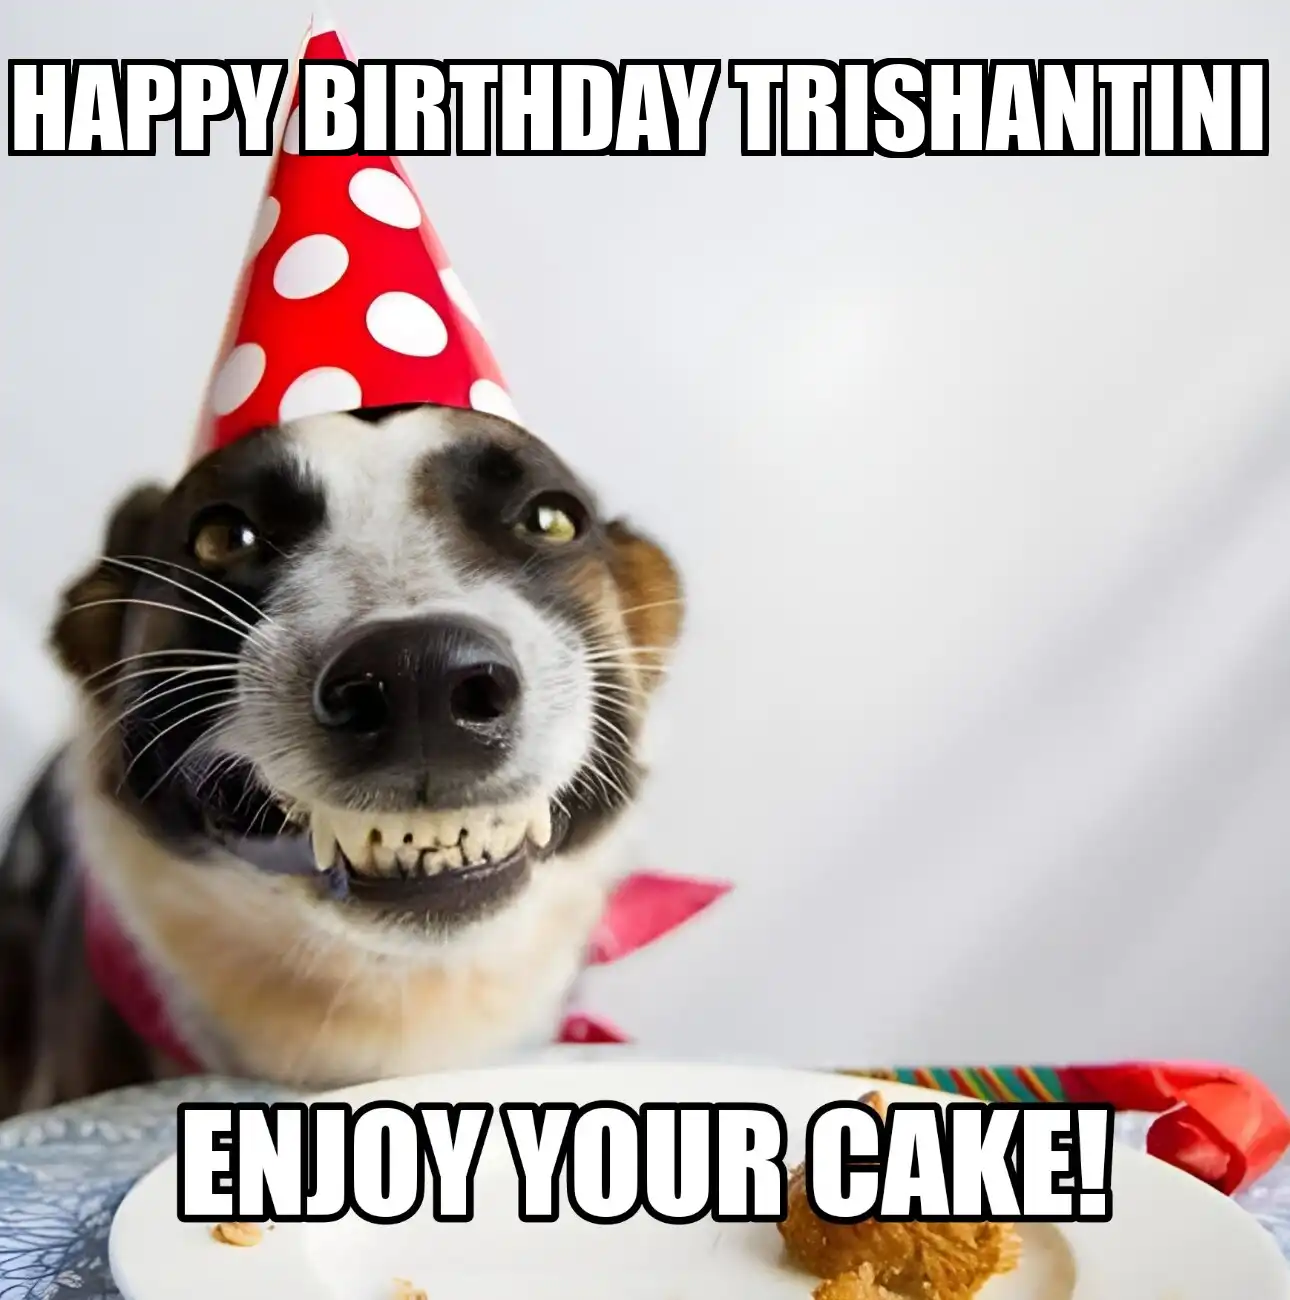 Happy Birthday Trishantini Enjoy Your Cake Dog Meme